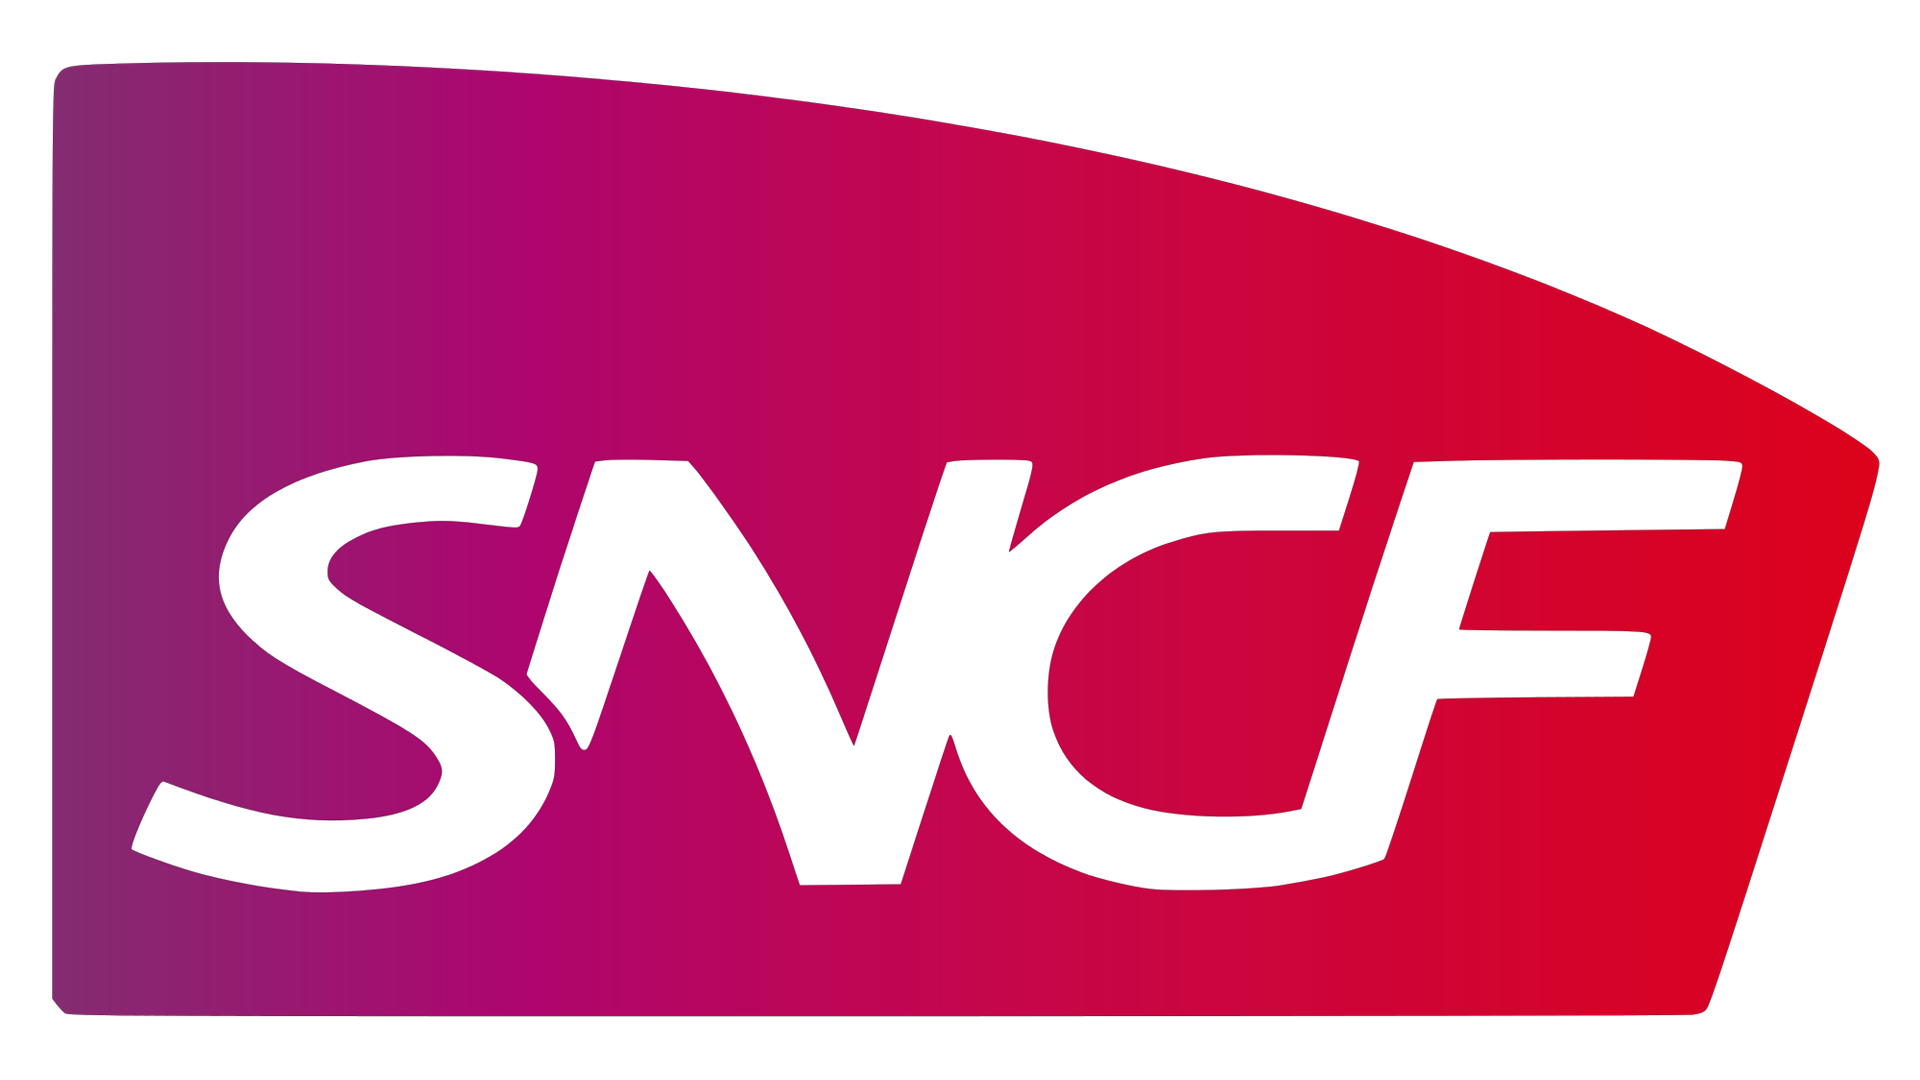 SNCF logo